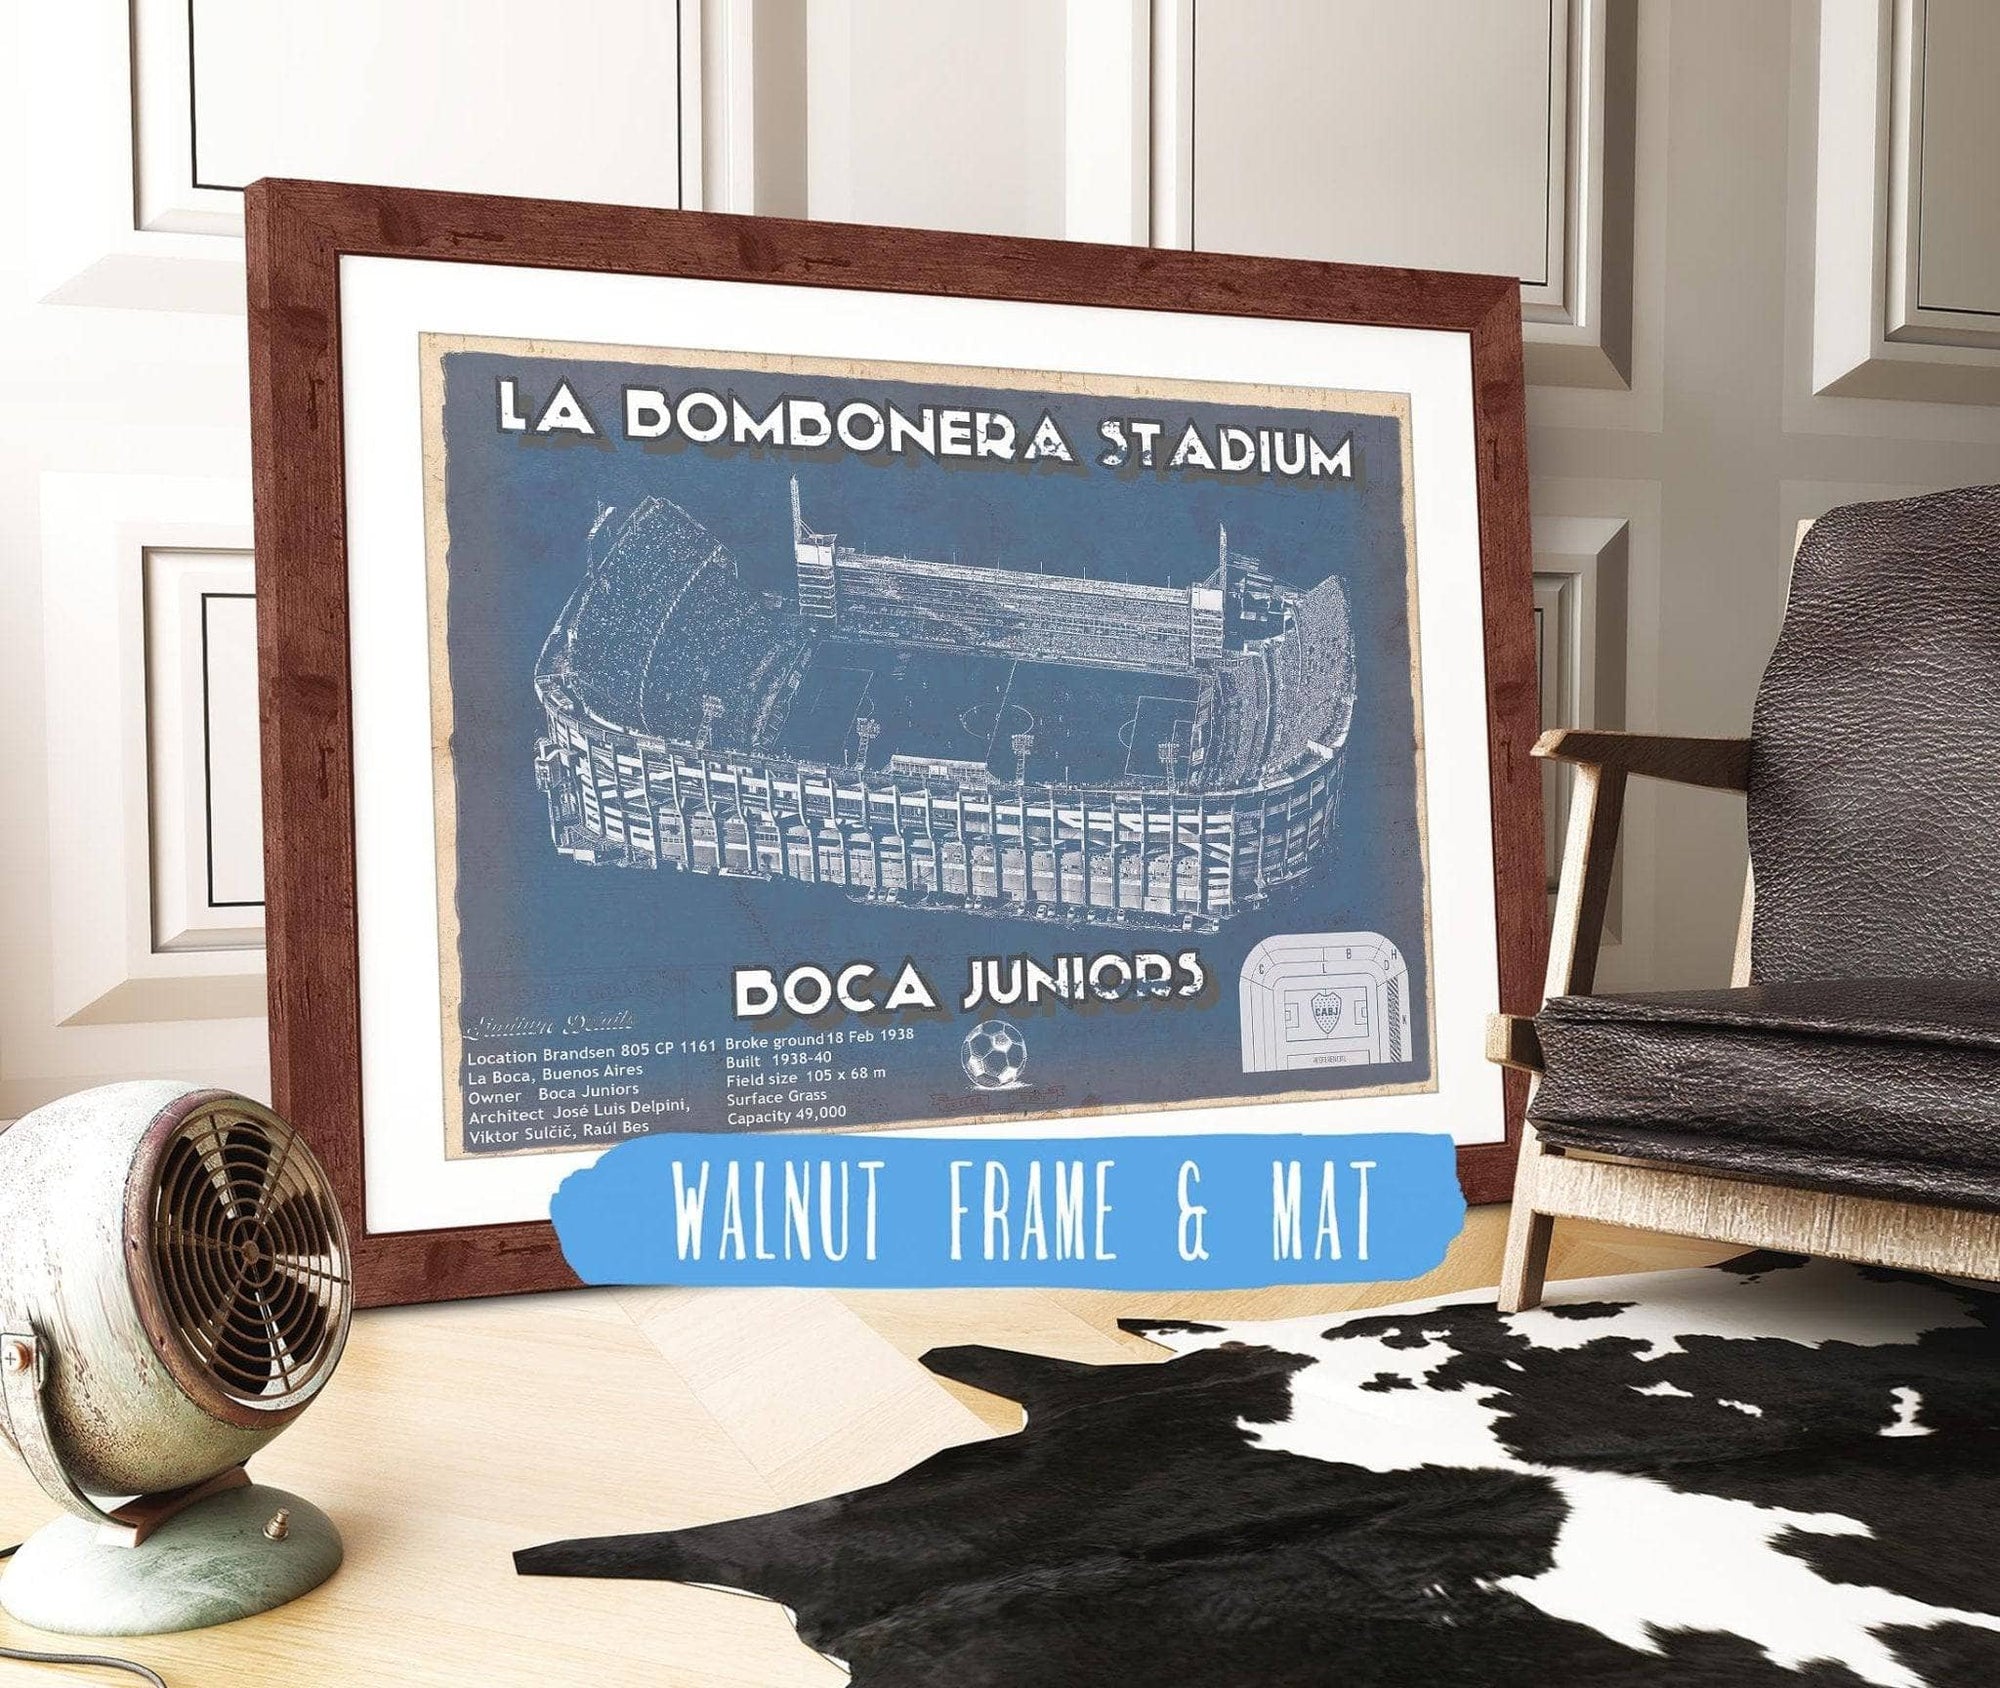 Cutler West Soccer Collection 14" x 11" / Walnut Frame & Mat Boca Juniors F.C - La Bombonera Stadium Soccer Print 733938727_48609